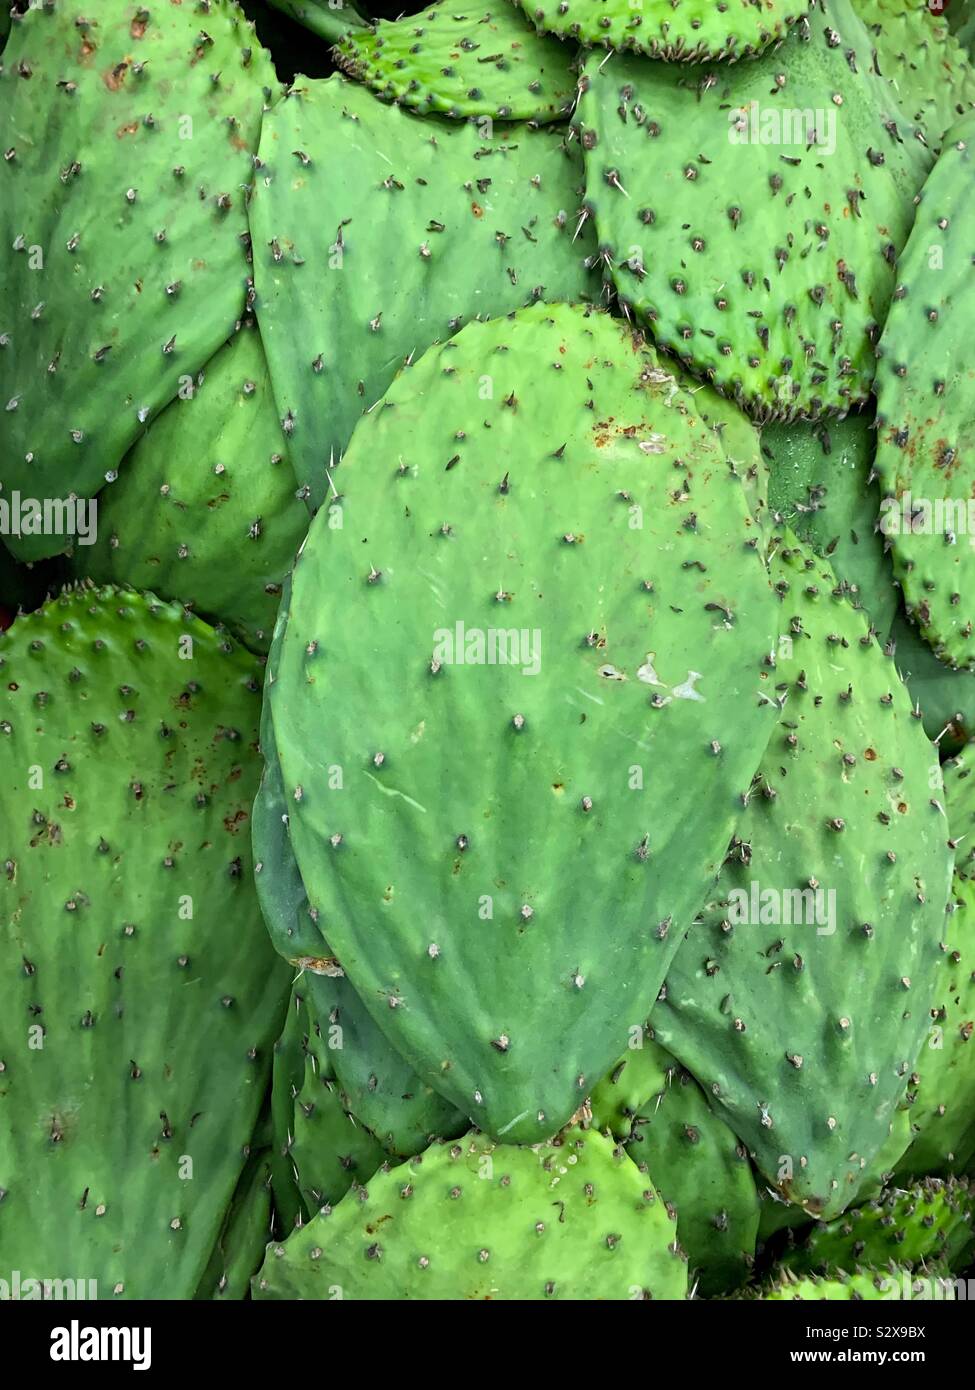 Fattoria fresco nopales cactus foglie. Foto Stock